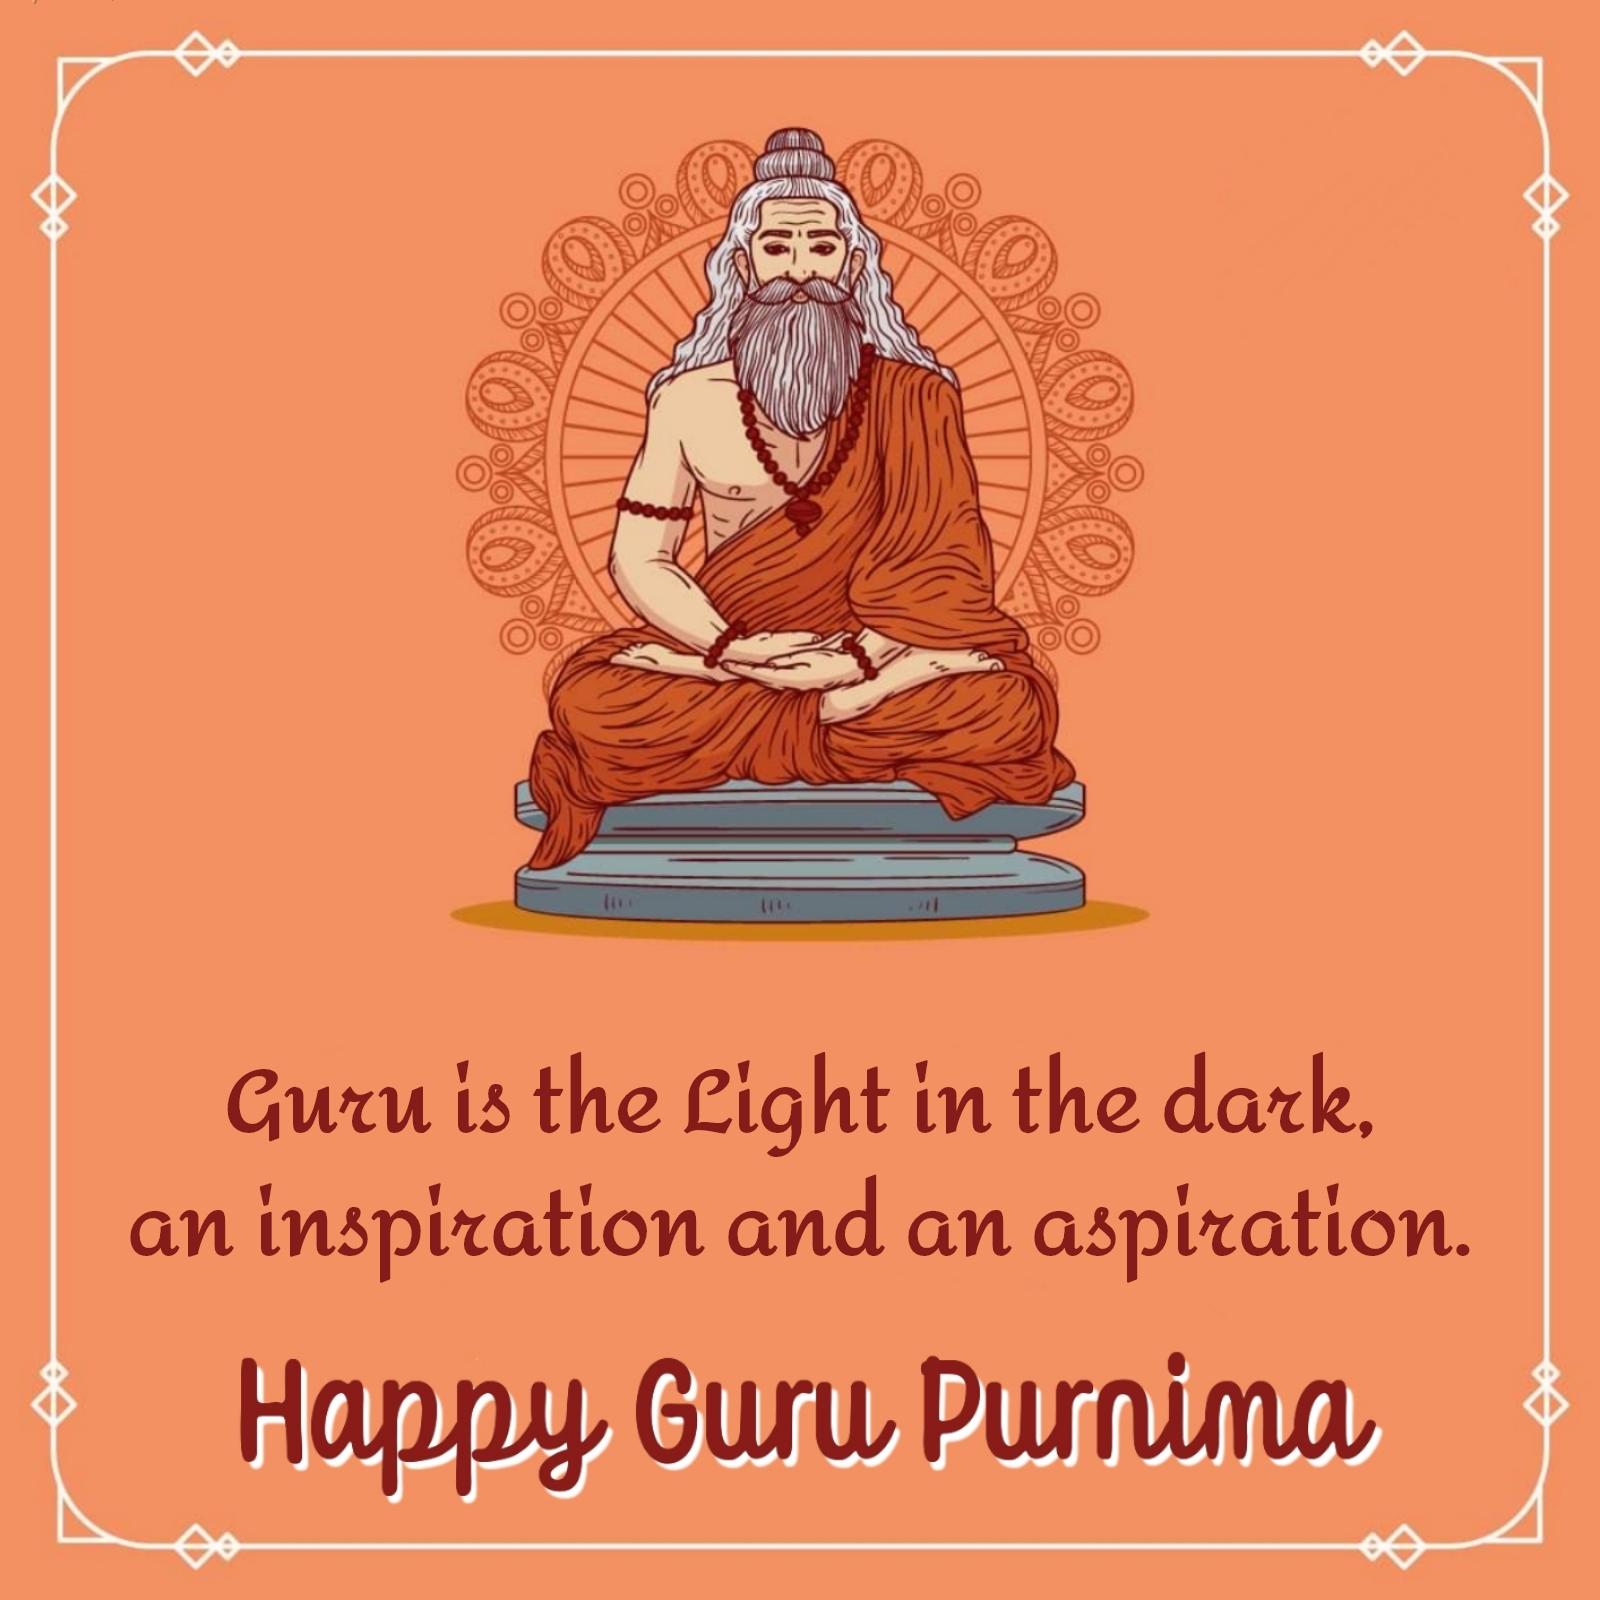 Guru is the Light in the dark an inspiration and an aspiration